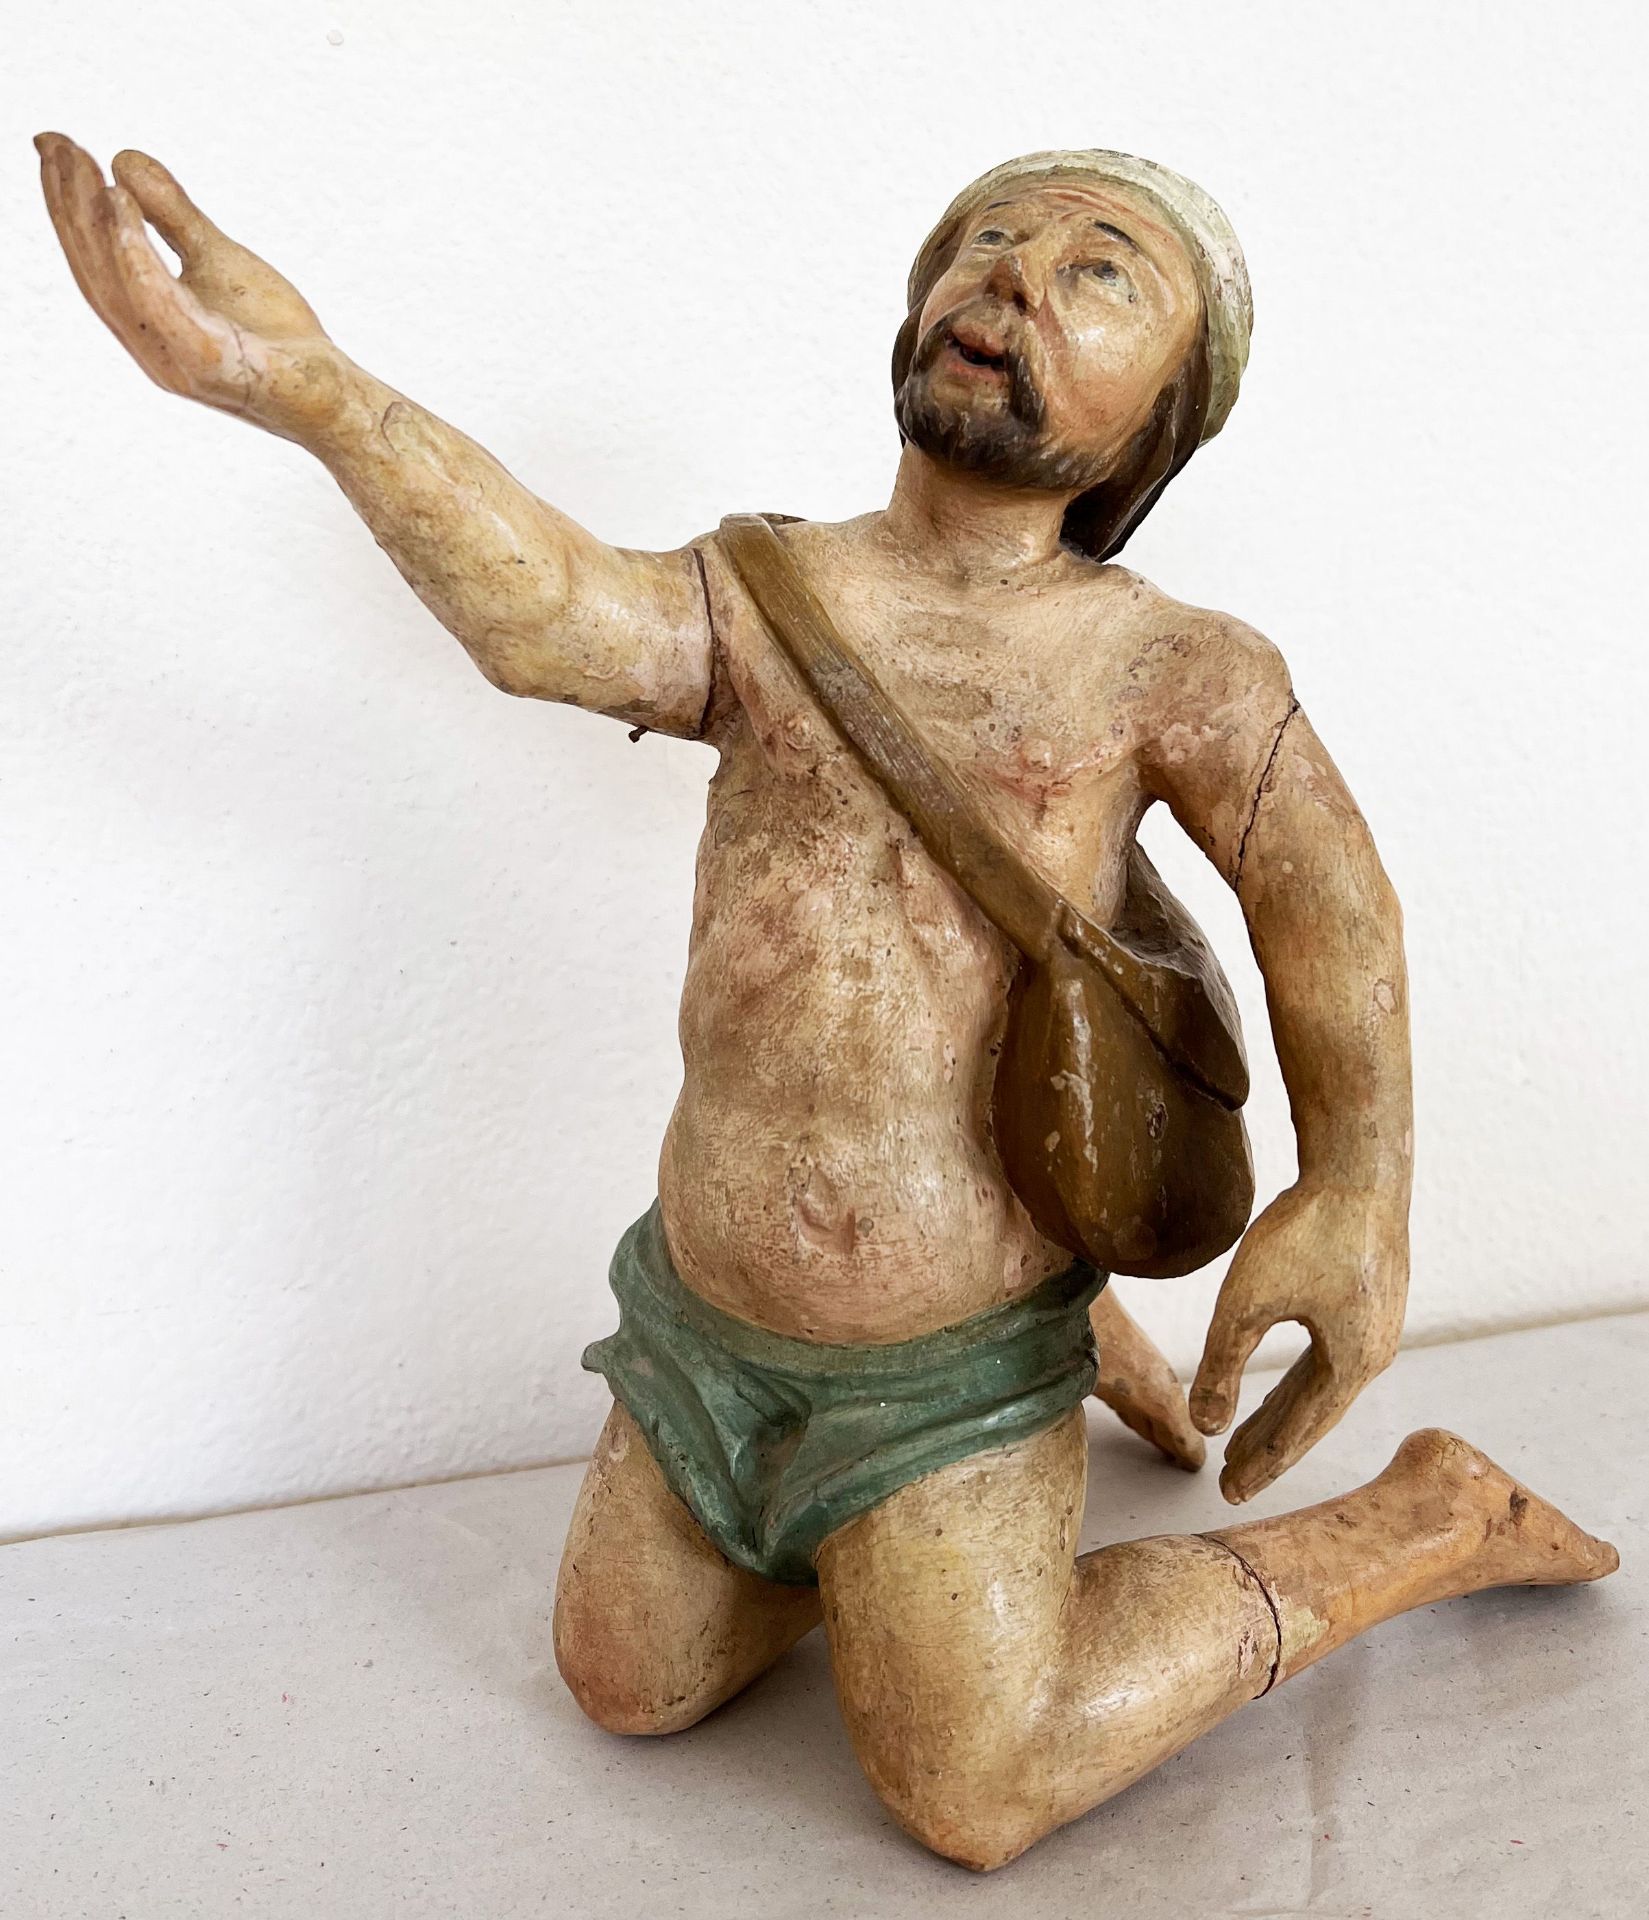 Bettler mit erhobenem Arm, Almosen erbittend/ Beggar asking for alms. Süddeutsch, 18. Jh., Holz,